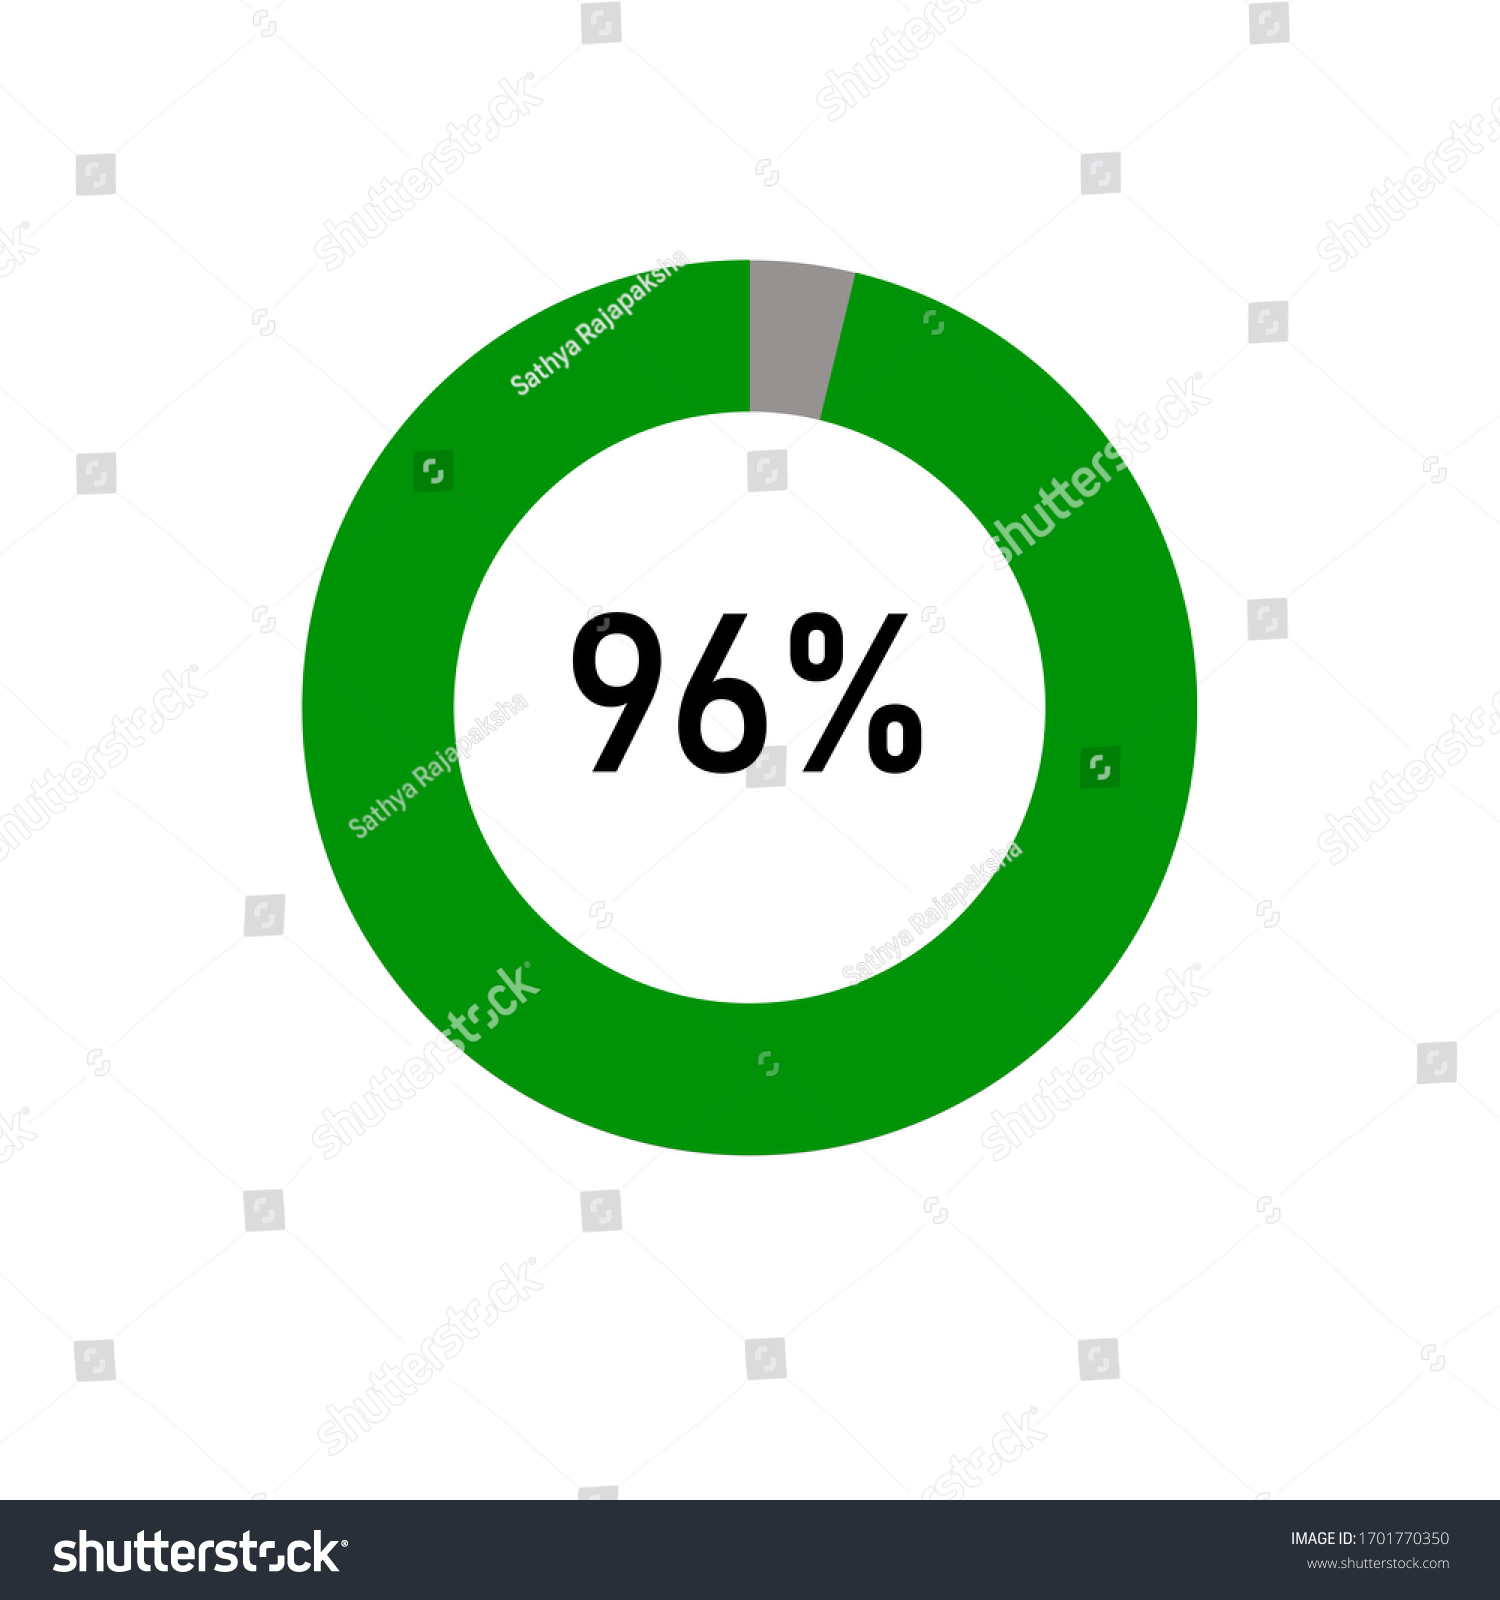 SVG of green and ash Percentage diagram for infographic, UI, web design. Progress bar template. Vector illustration.showing 96% svg